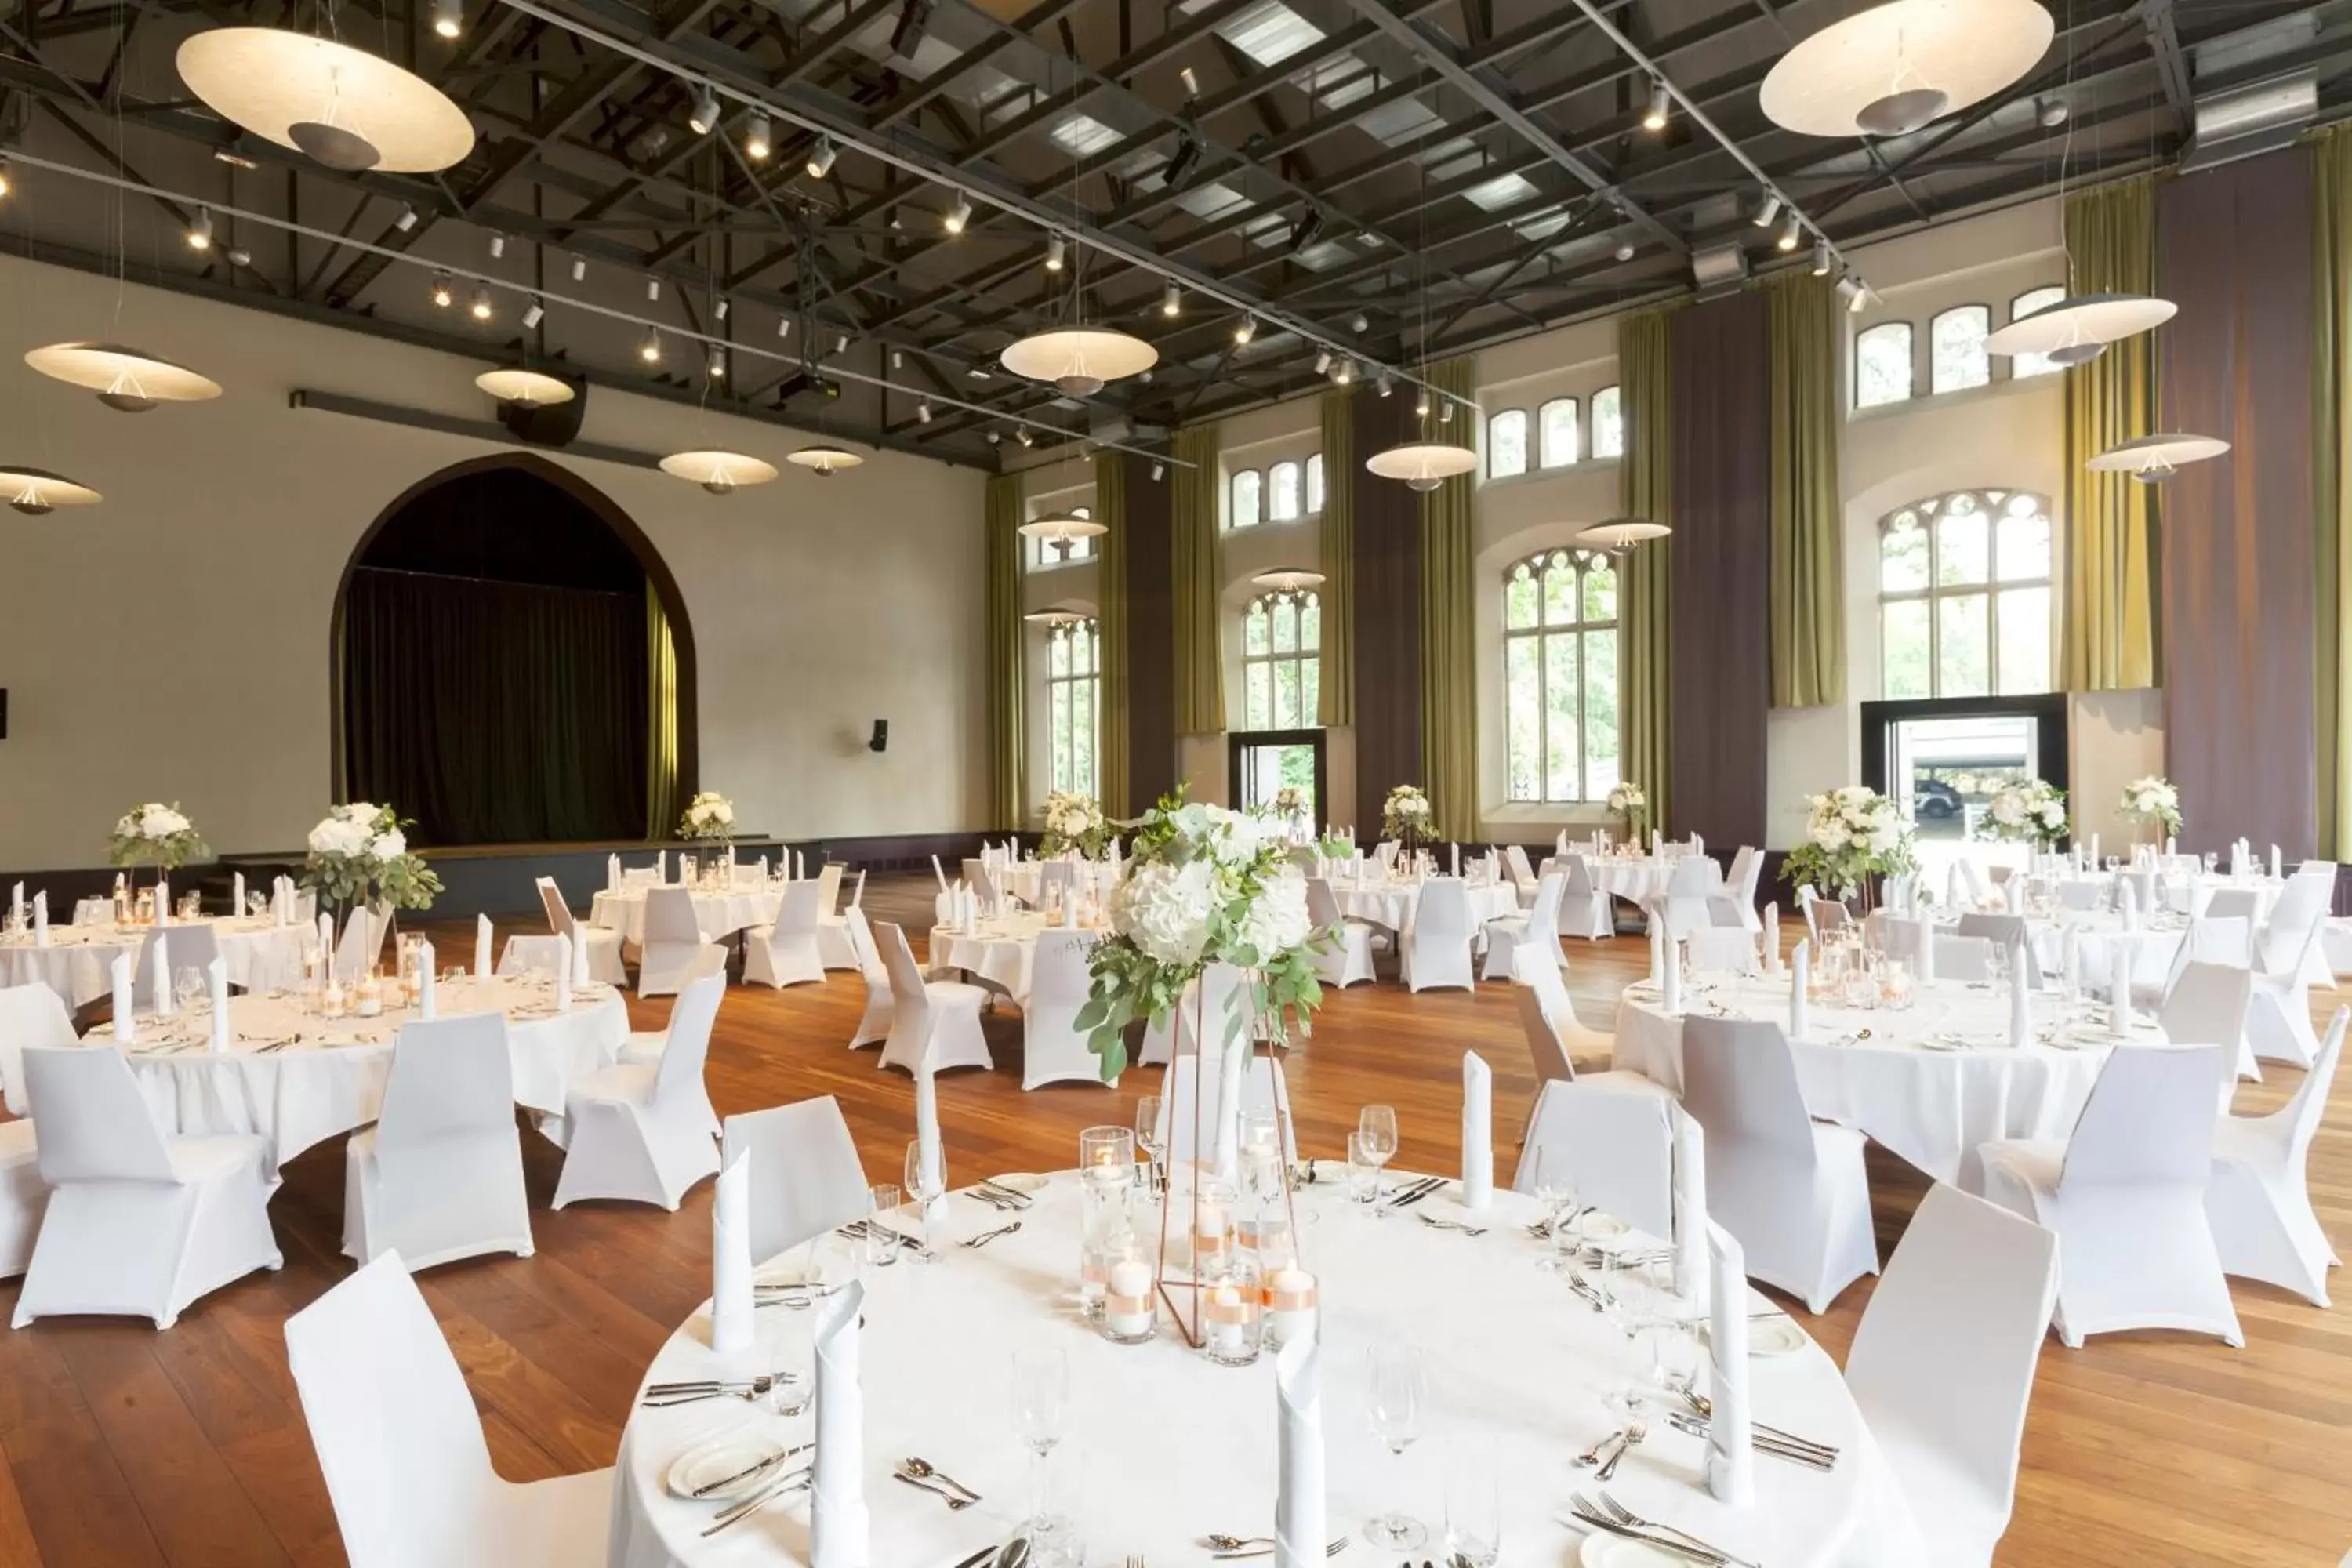 Banquet/Function facilities, Banquet Facilities in Steigenberger Parkhotel Braunschweig